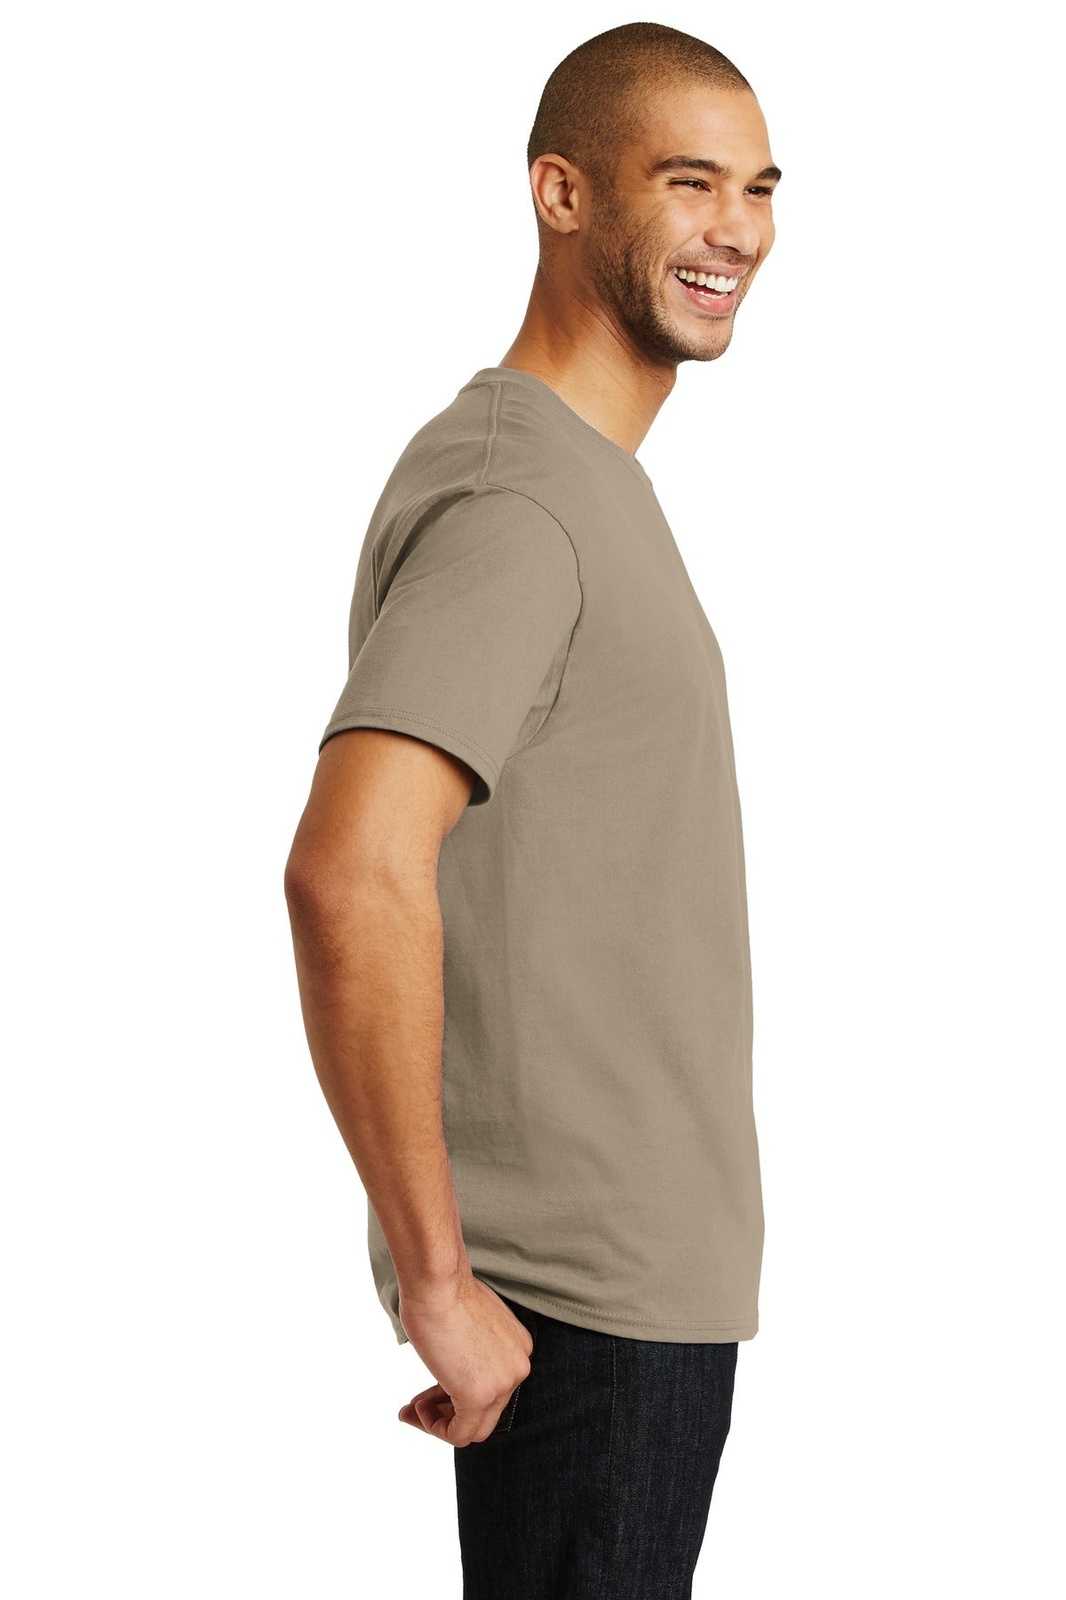 Hanes 5250 Tagless T-Shirt